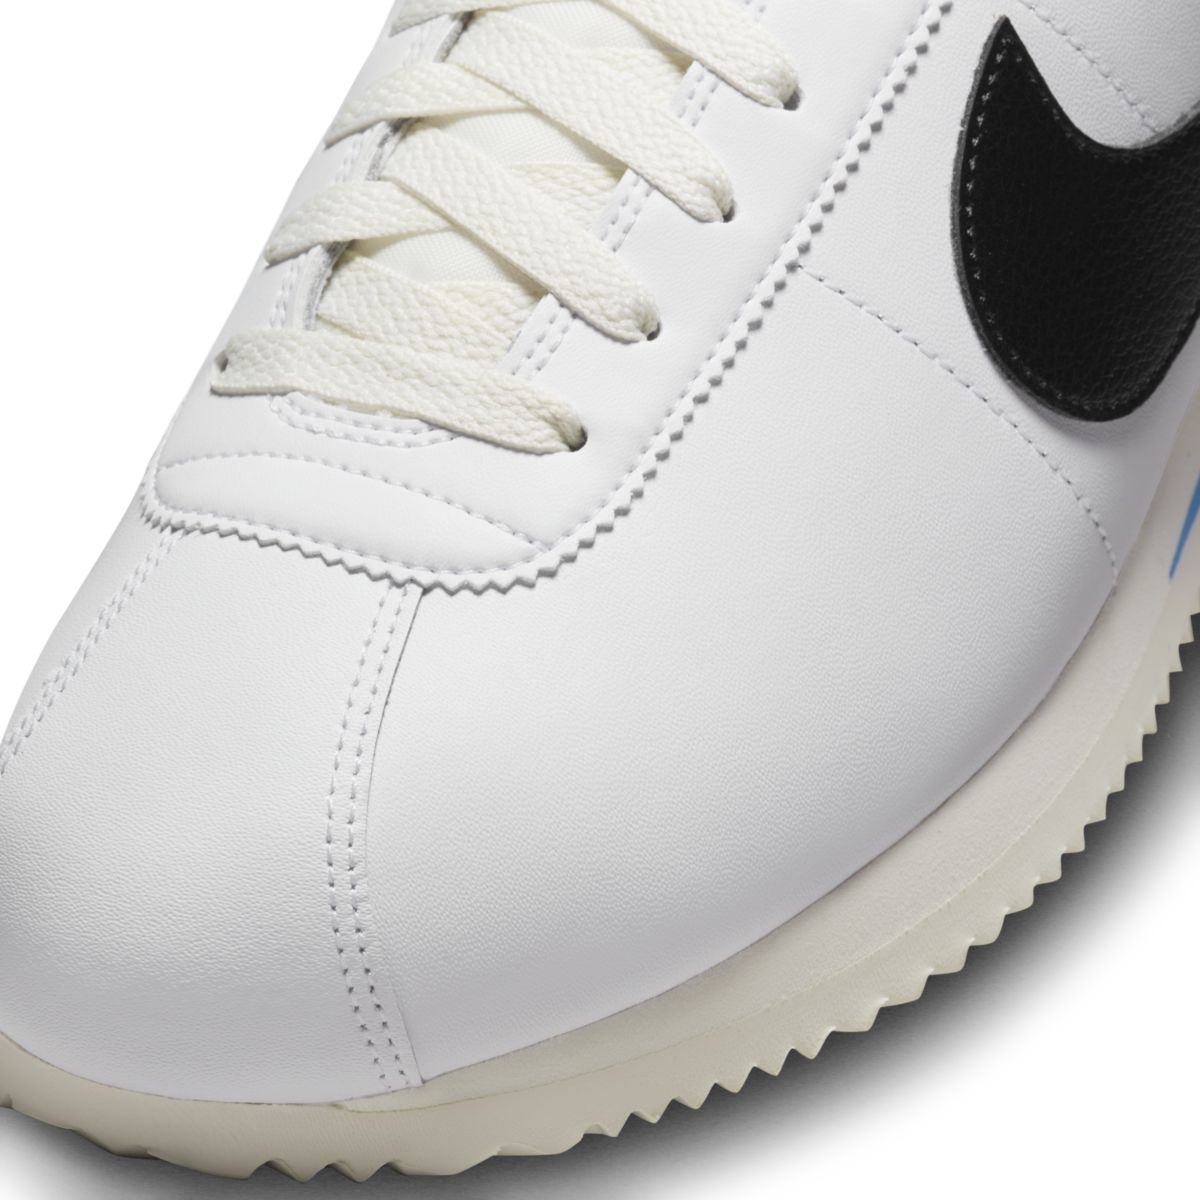 Nike Cortez White Black DM4044-100 7